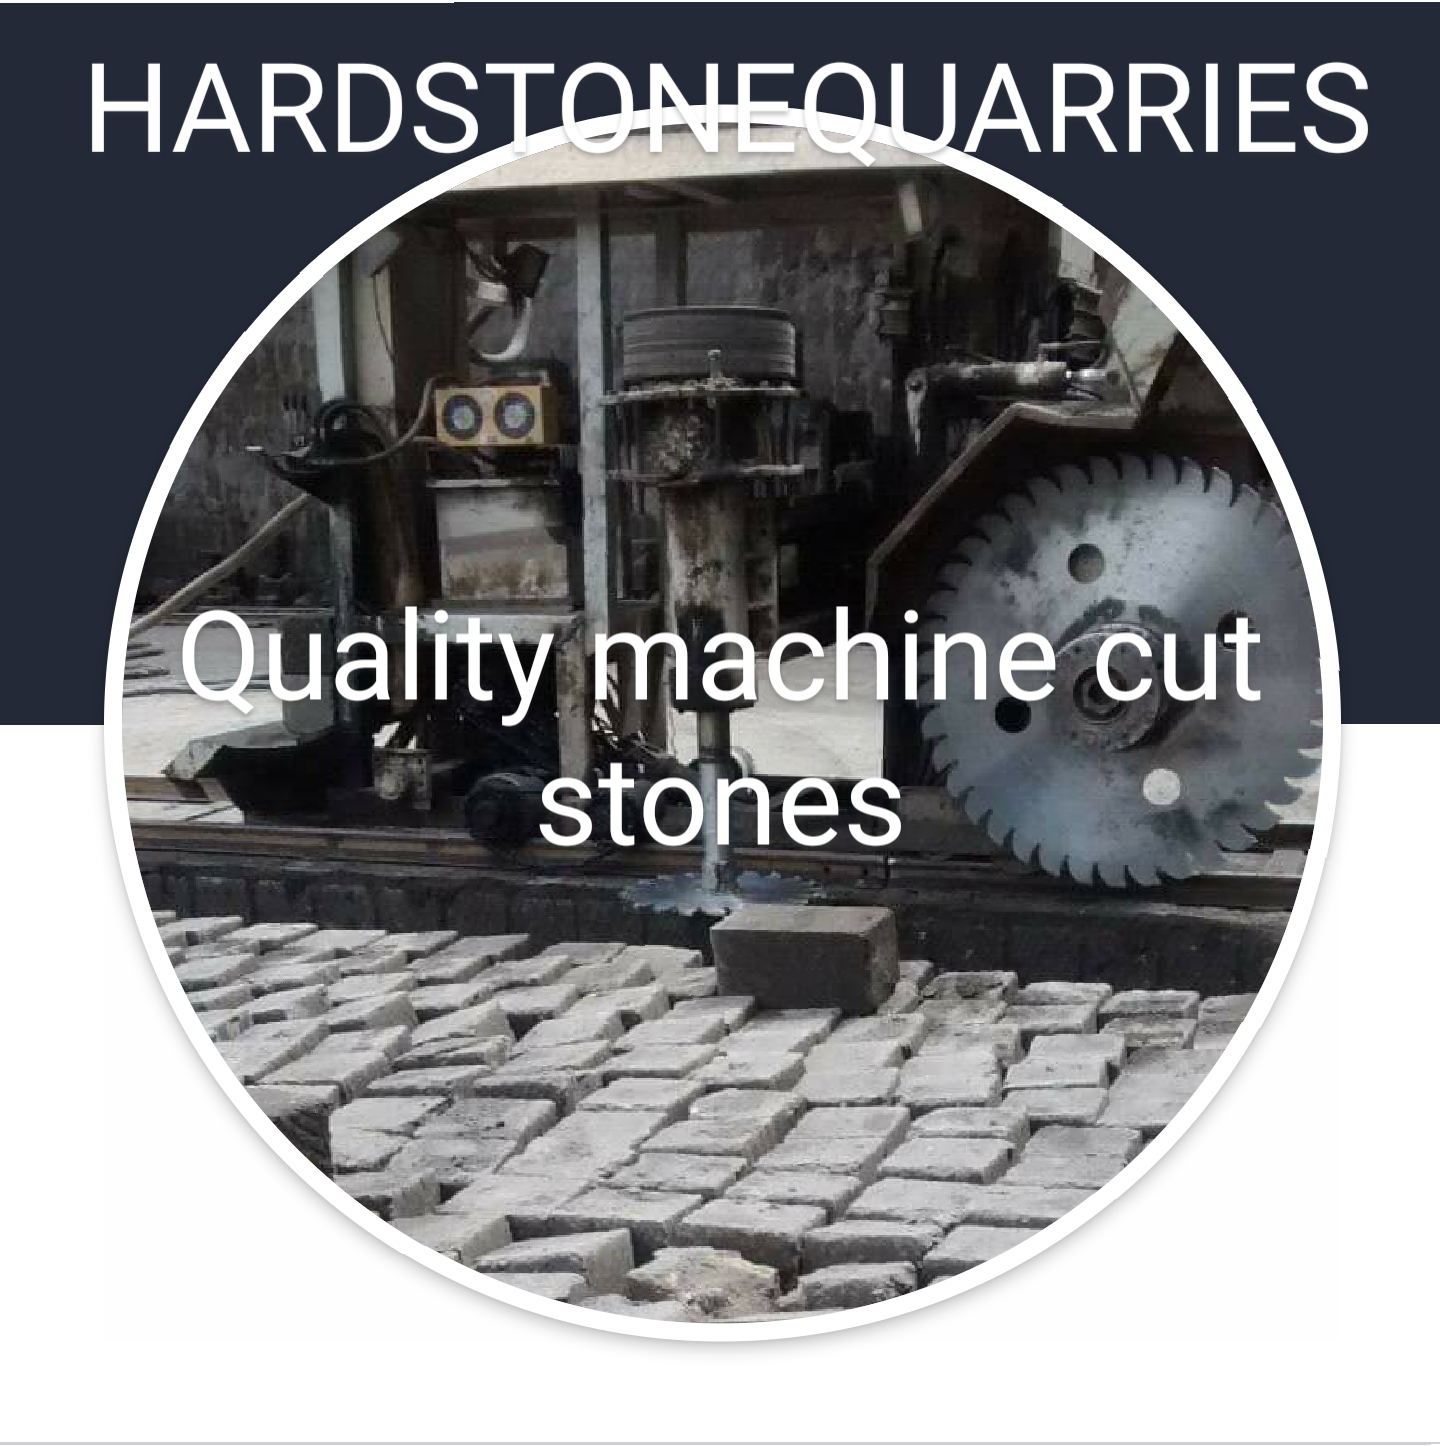 Hardstone-quarries